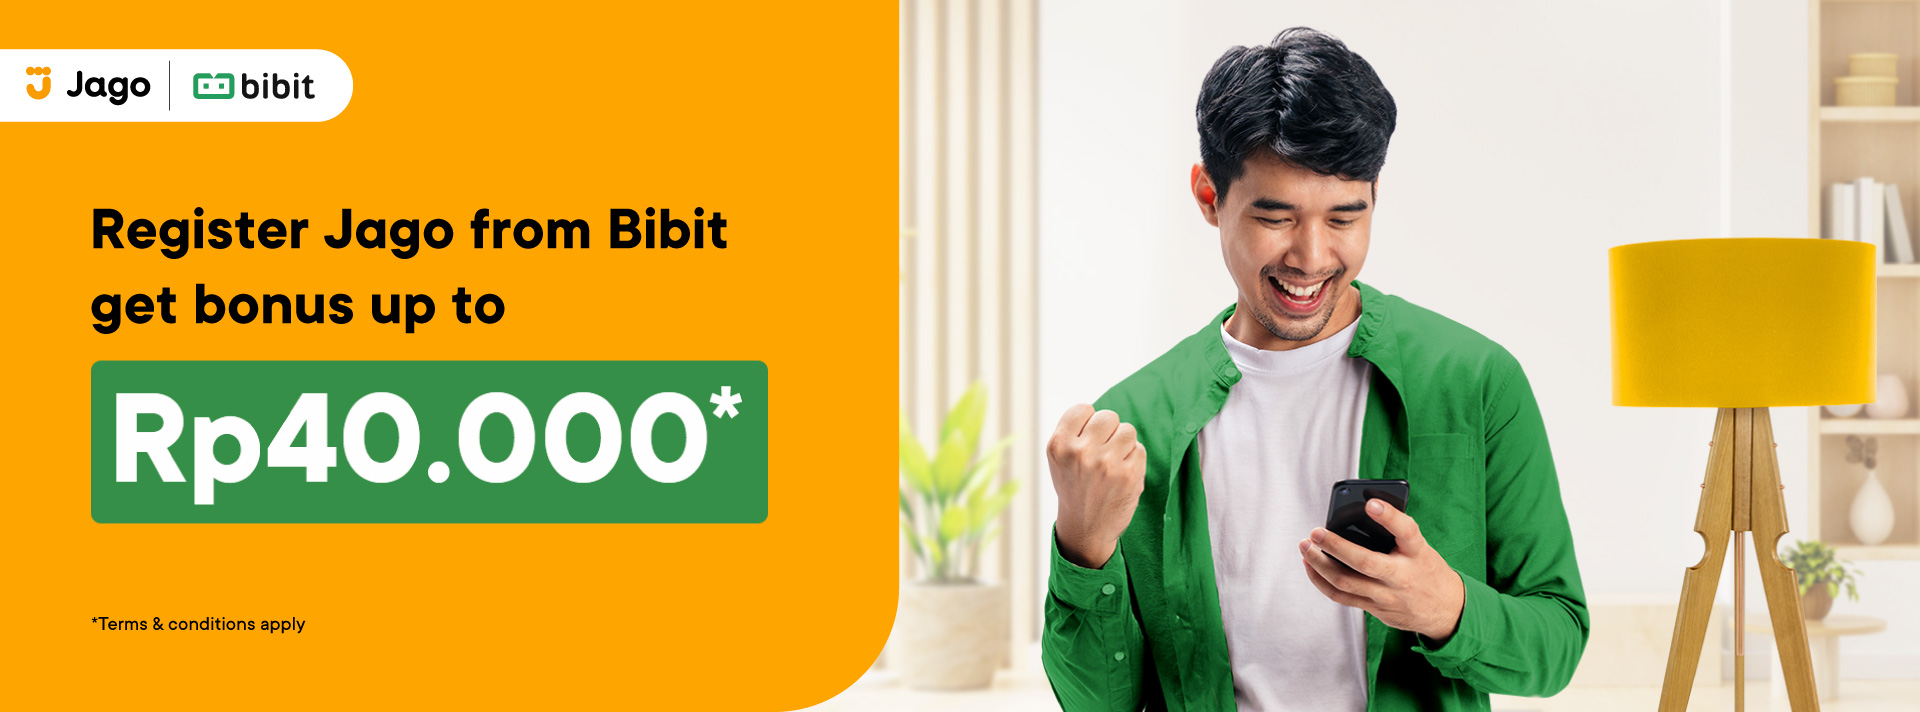 Register Jago from Bibit get bonus up to Rp40.000*